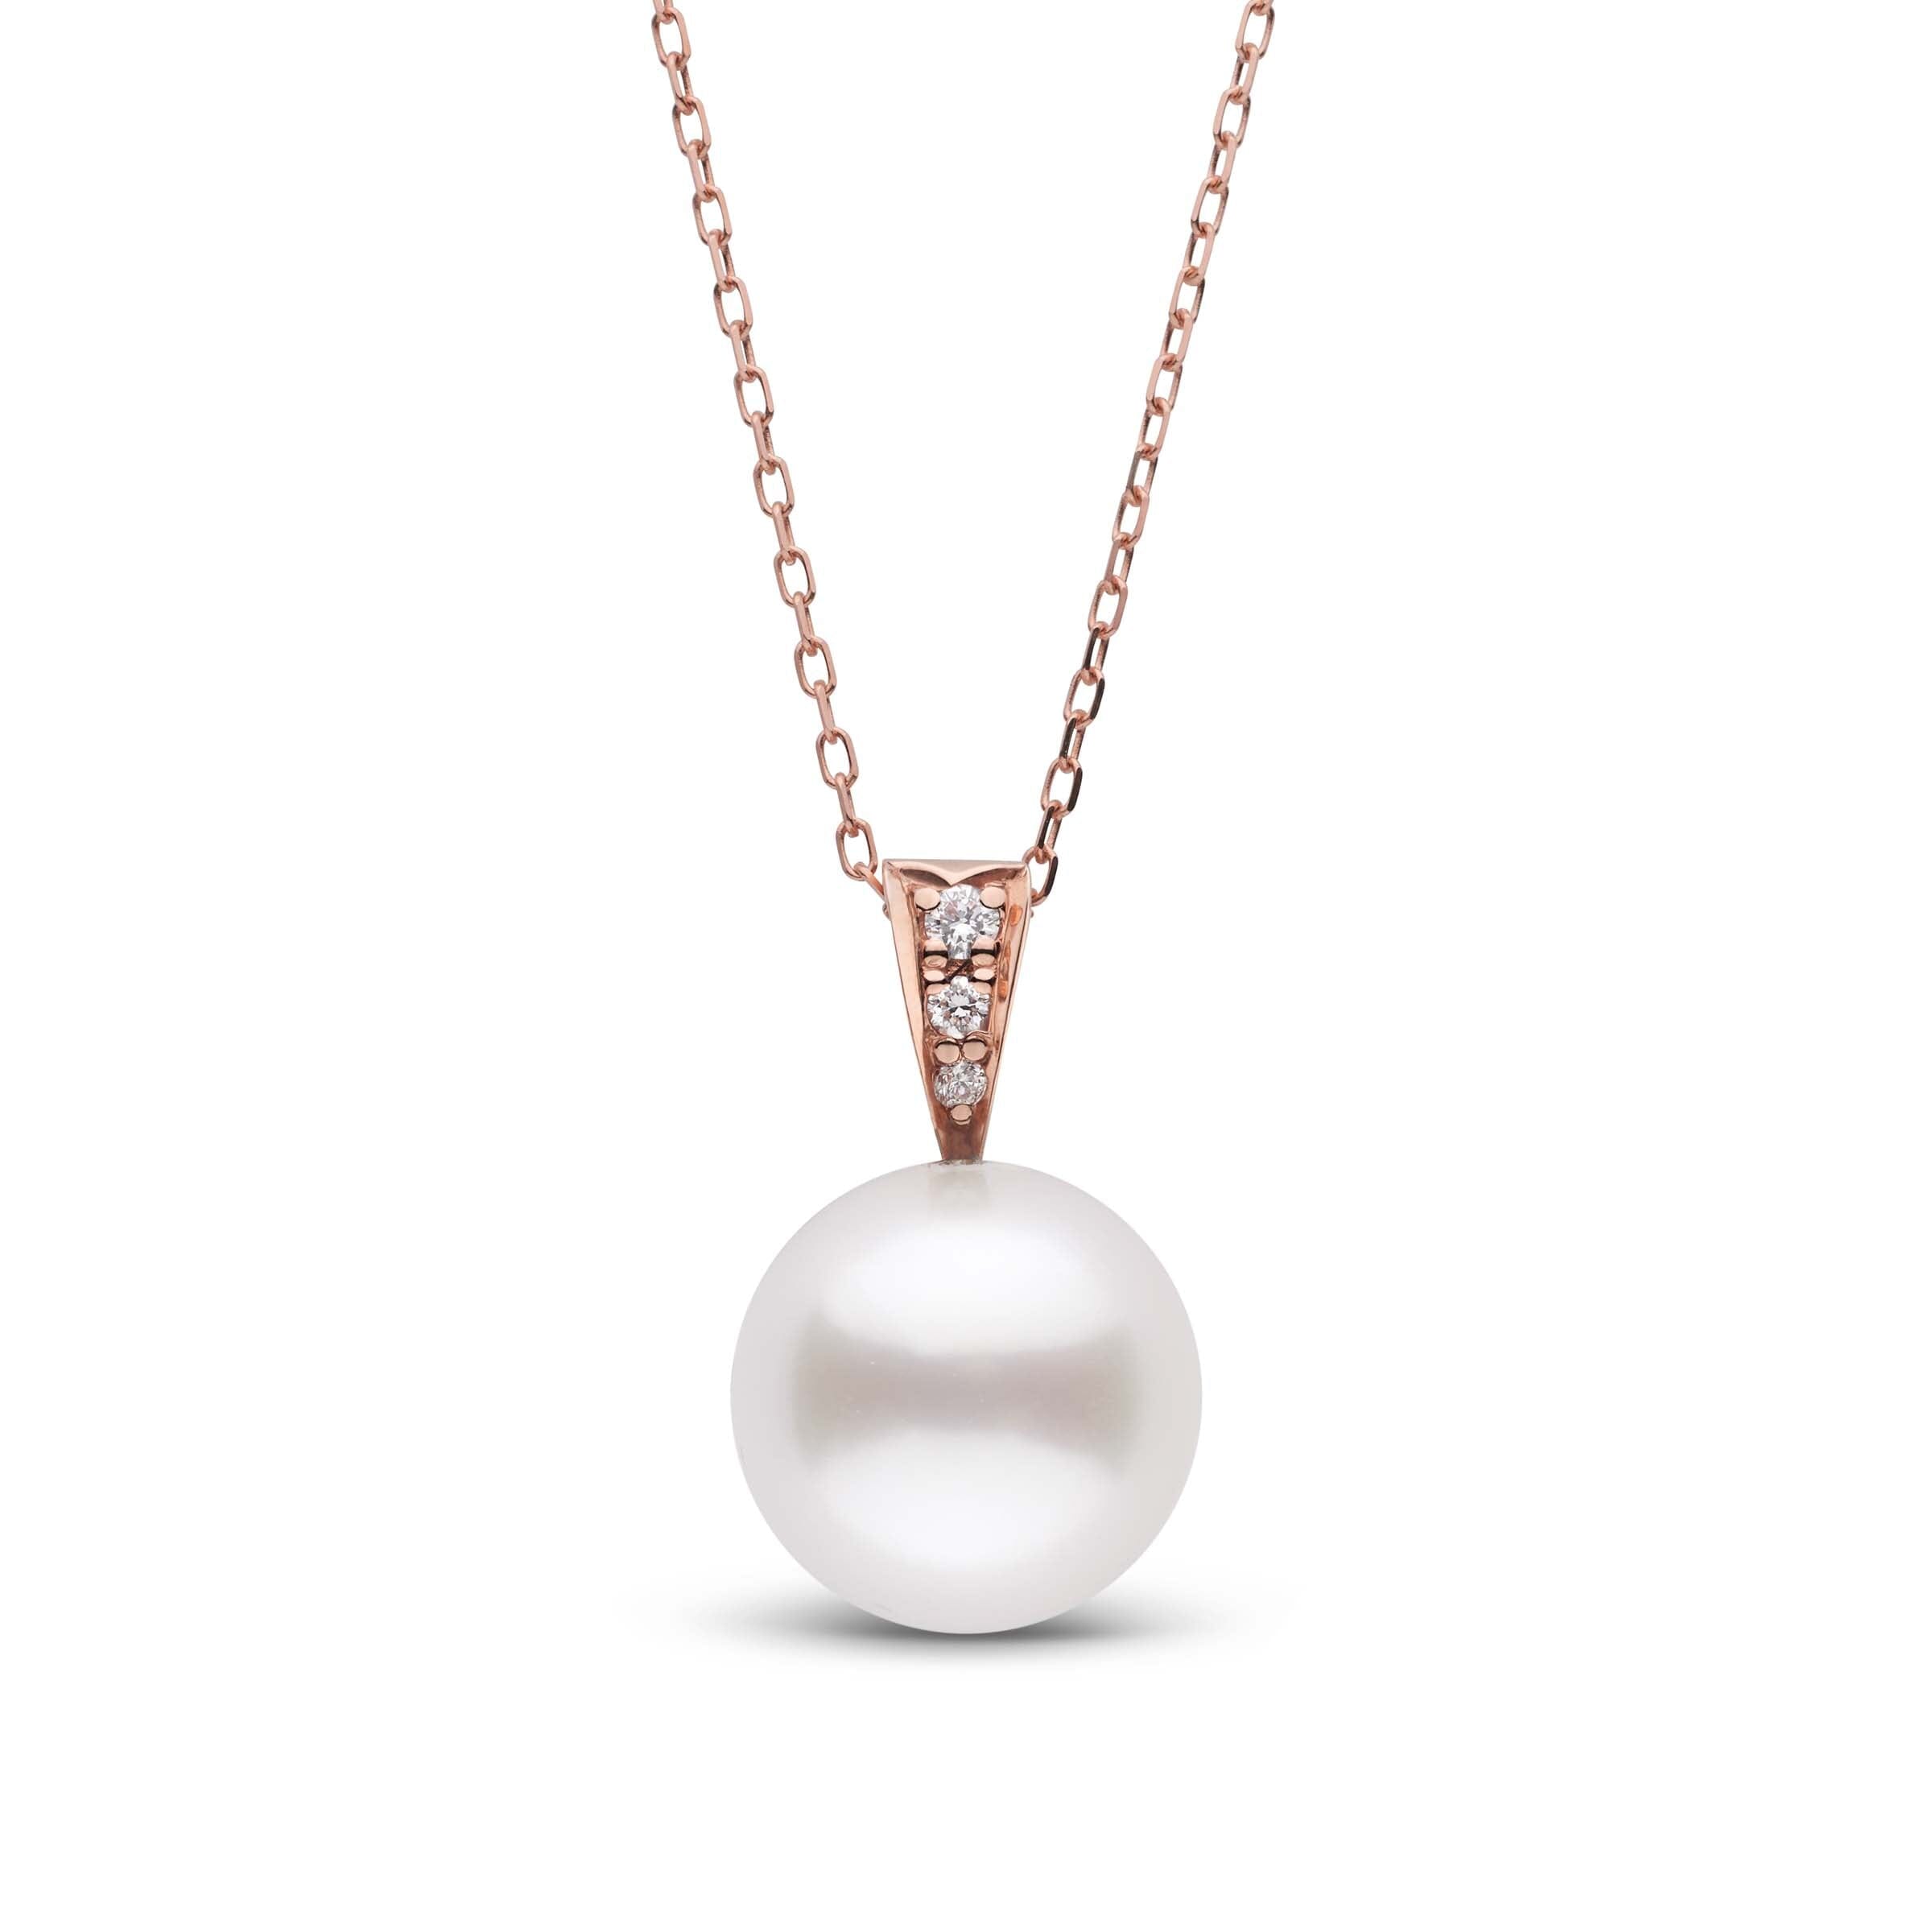 Desire Collection White 10.0-11.0 mm South Sea Pearl and Diamond Pendant